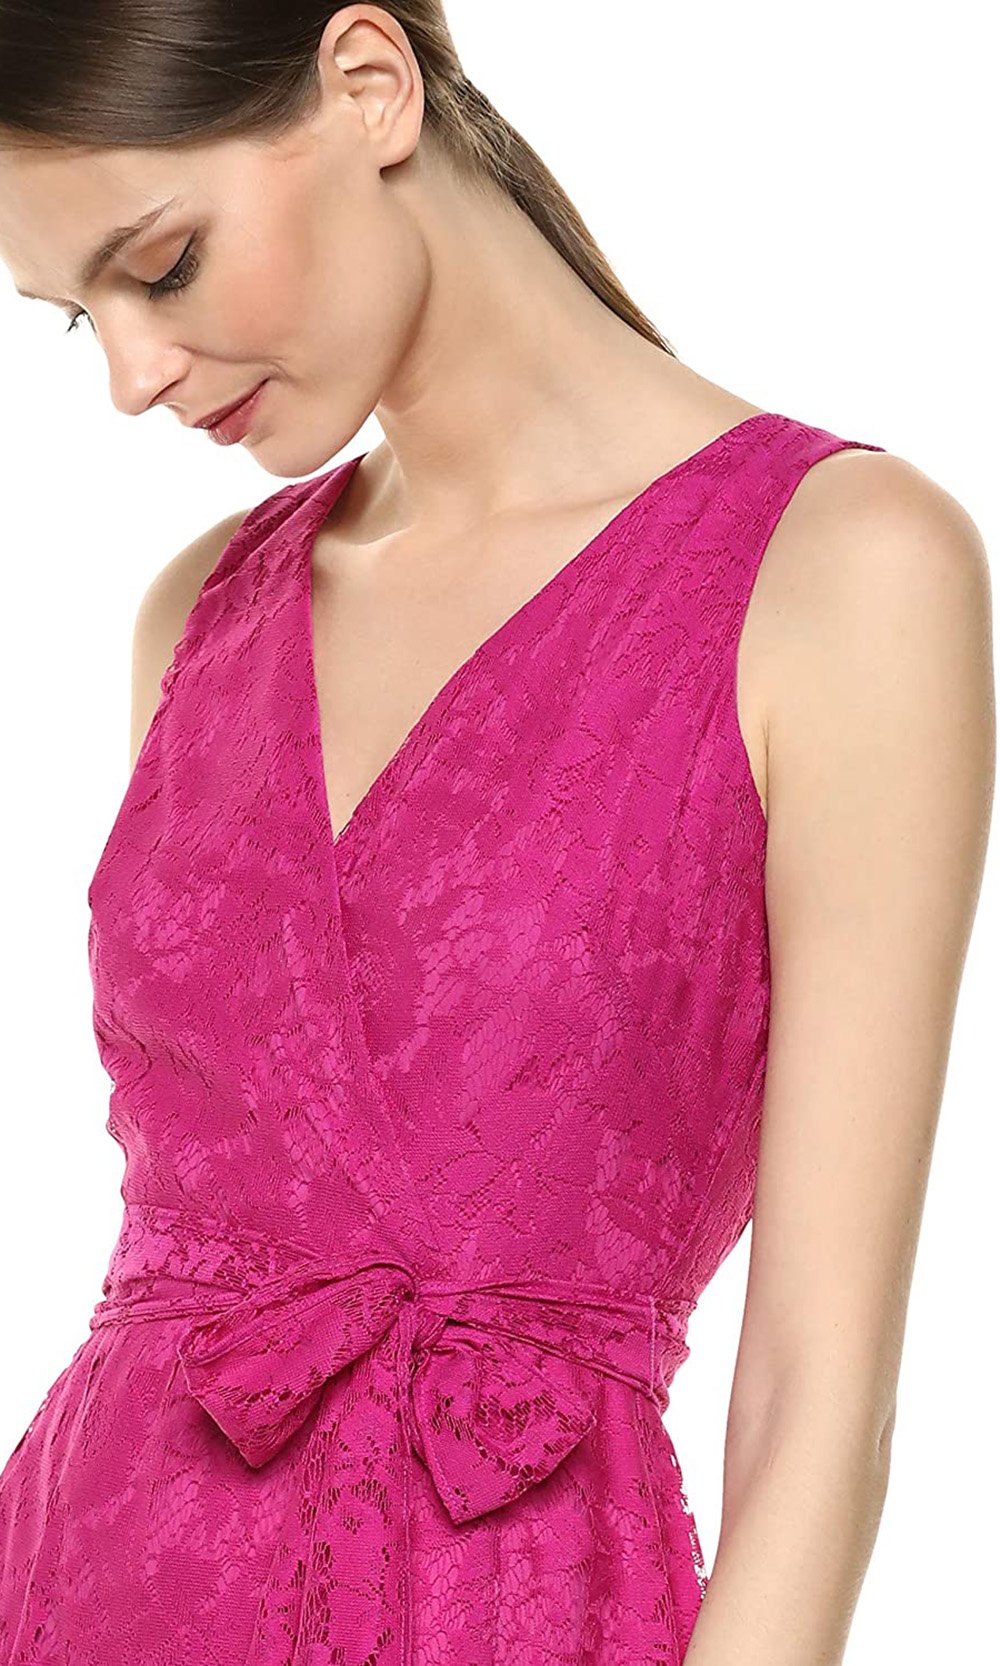 Gabby Skye - 56993MG Sleeveless Lace Dress In Pink